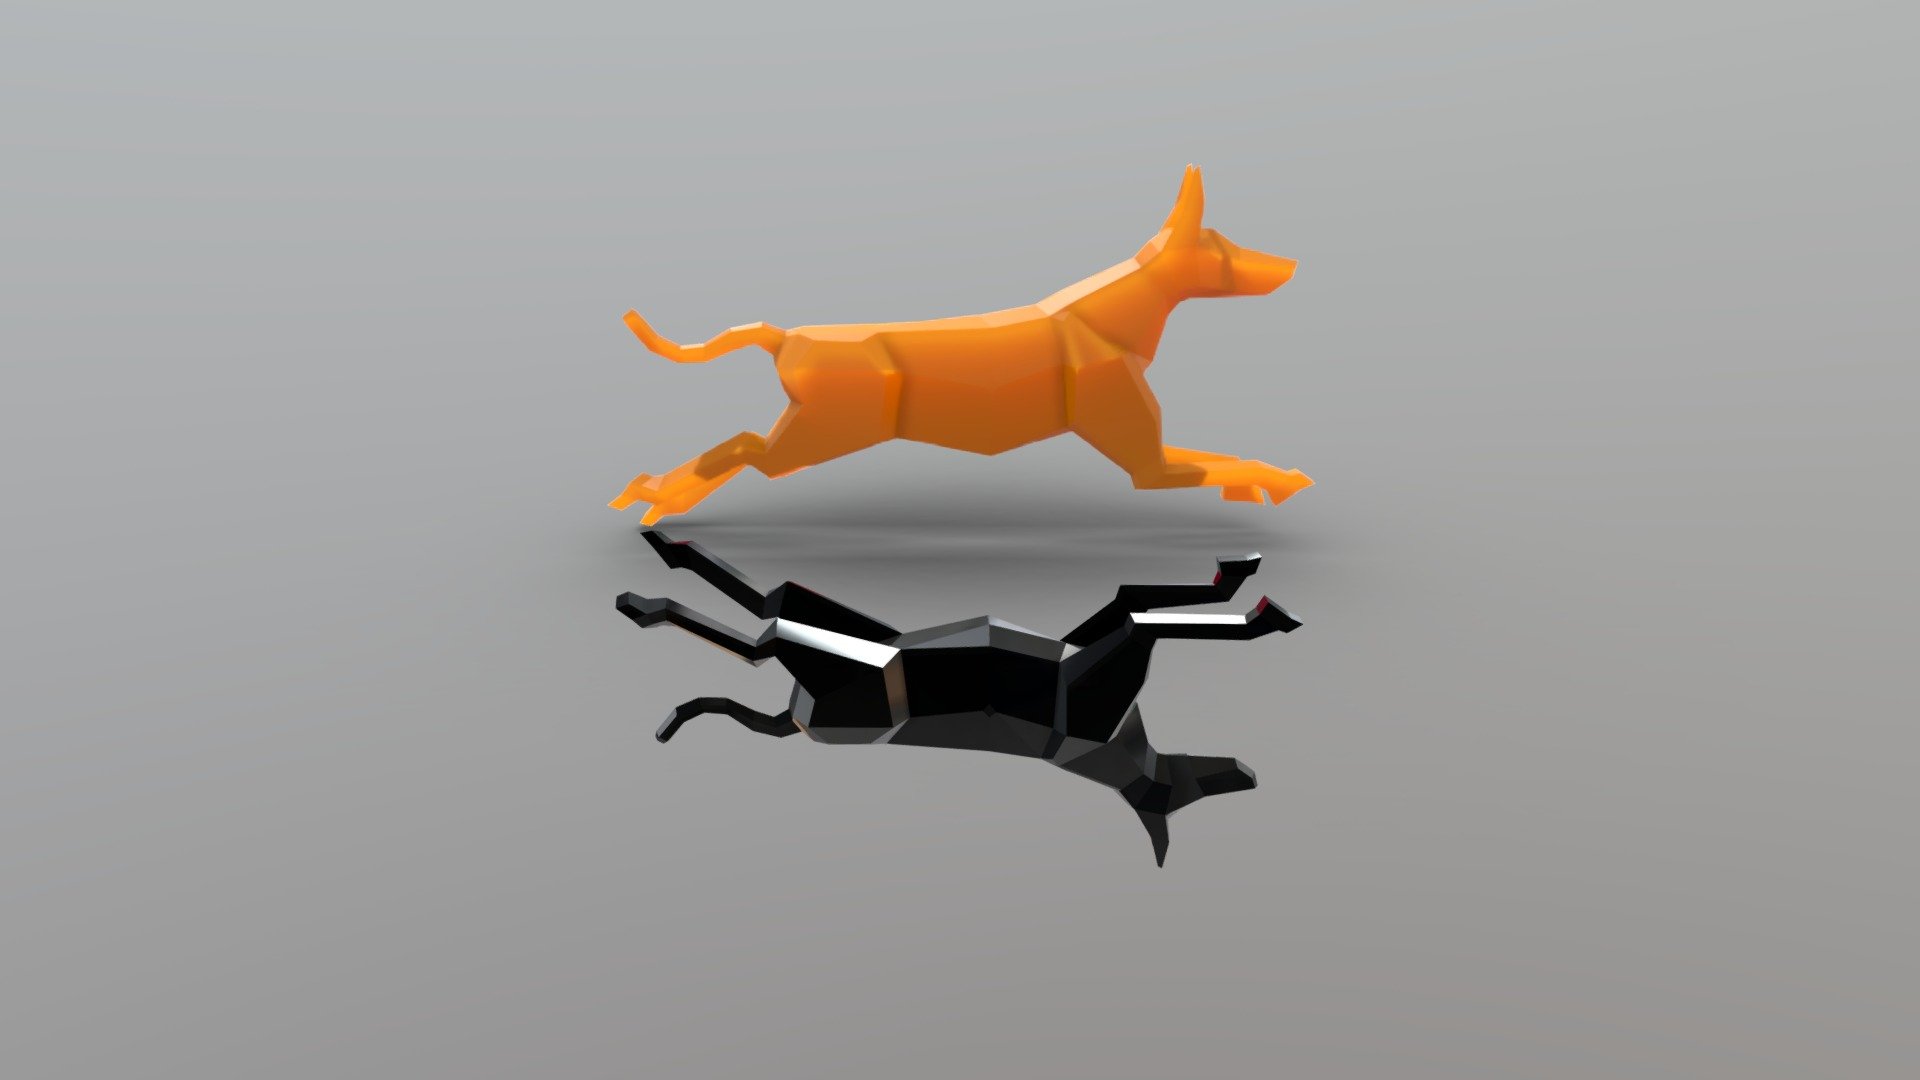 blender 2.8 test upload - Dog and dimensional twin - 3D model by Chaitanya Krishnan (@chaitanyak) 3d model